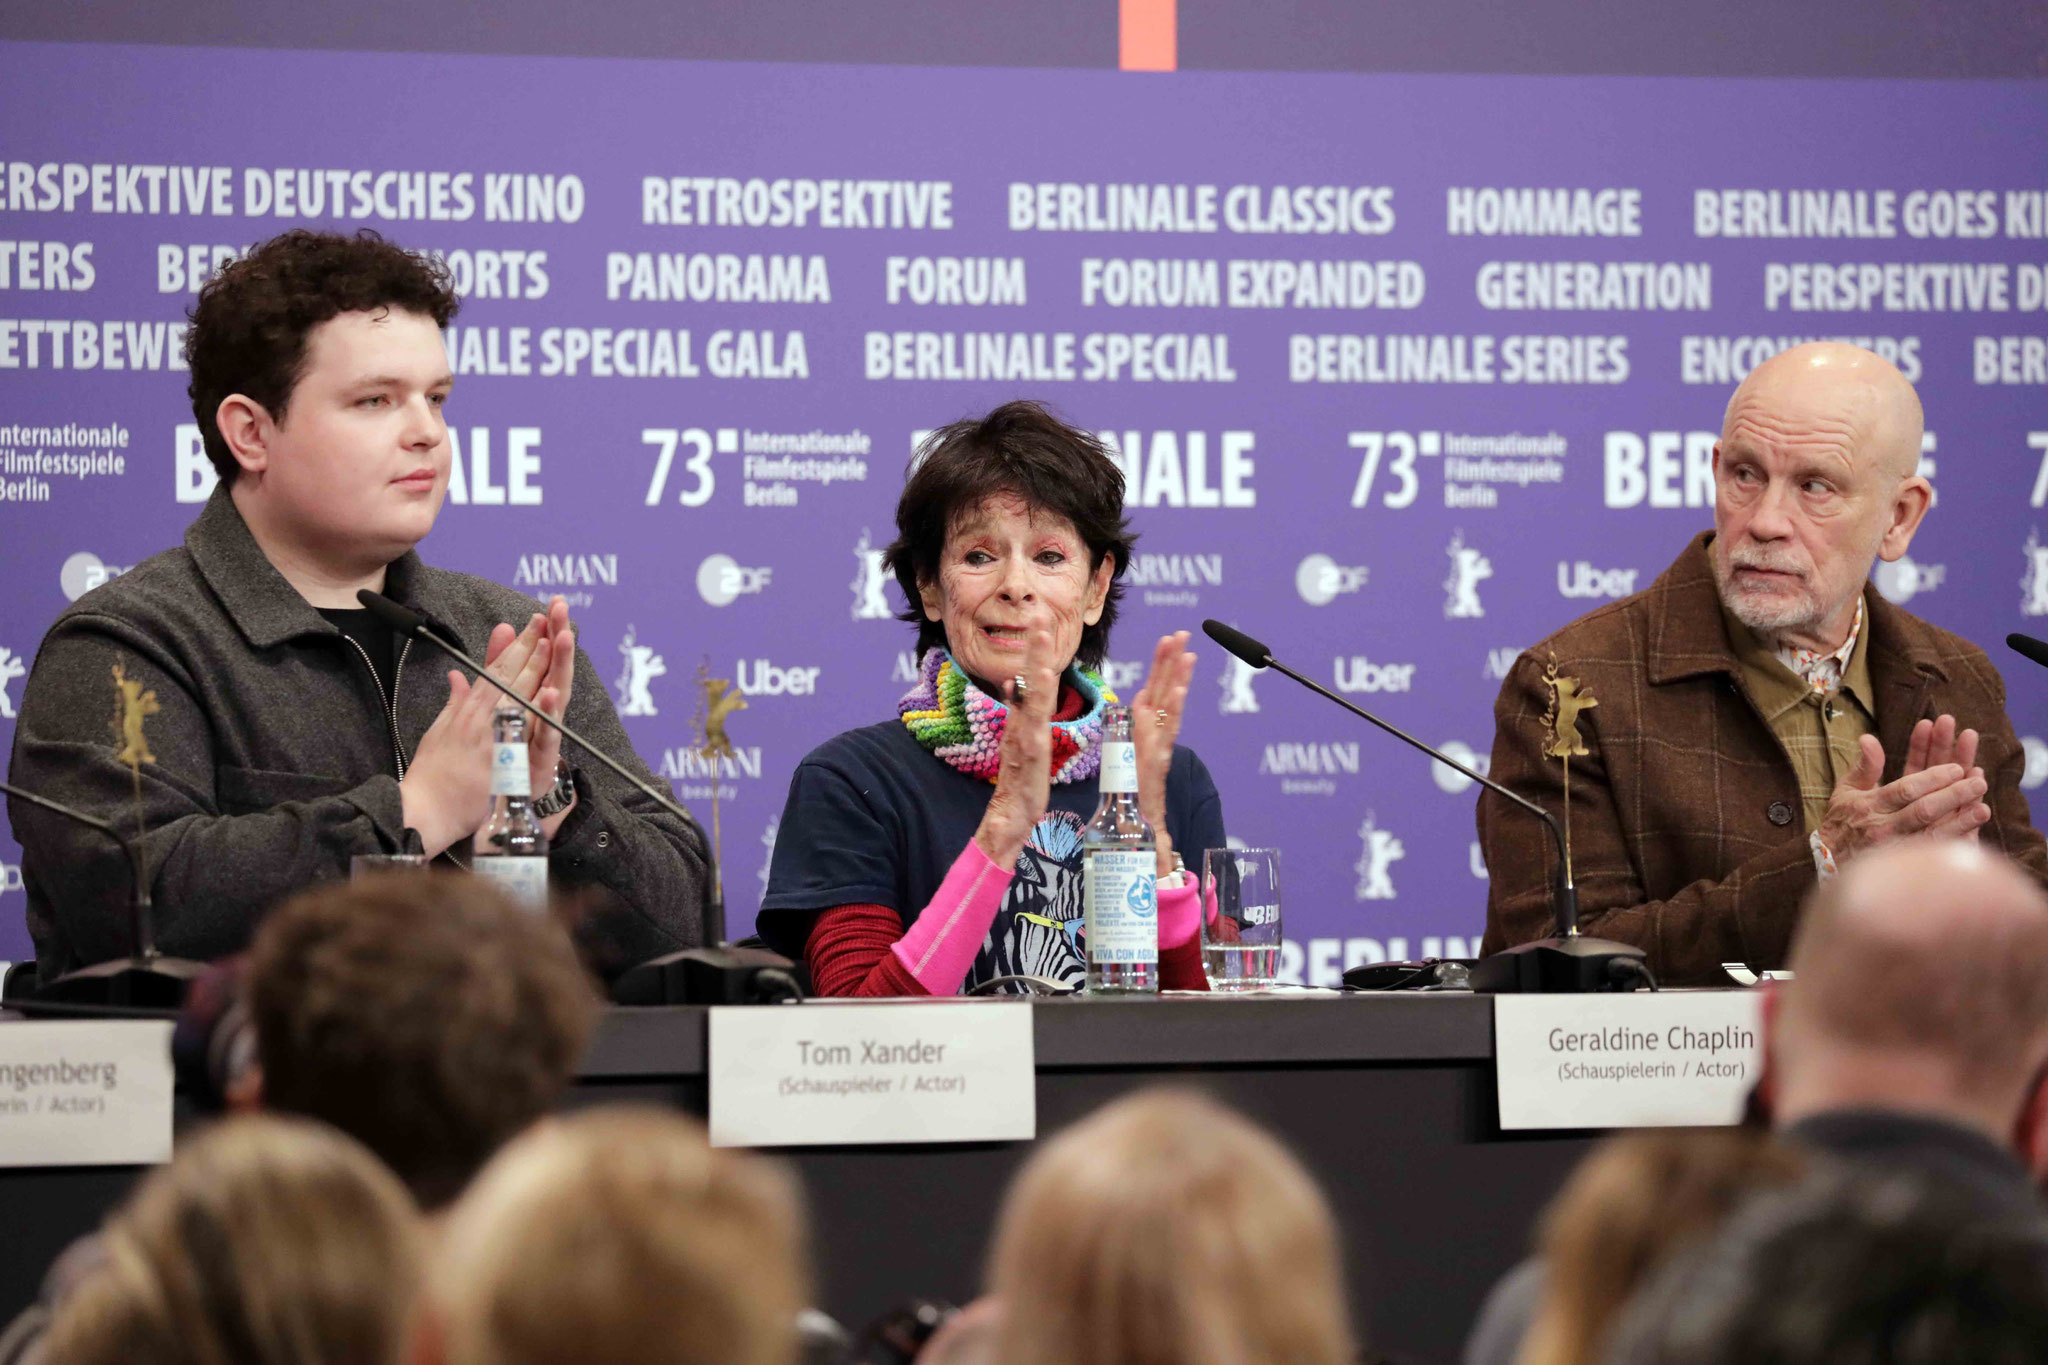 Tom Xander, Geraldine Chaplin and John Malkovich during the press conferences for the film "Seneca".